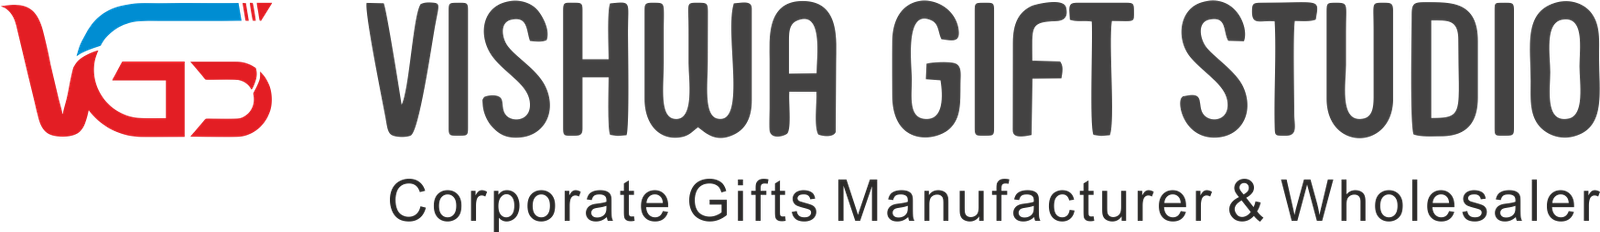 Vishwa Gift Studio logo